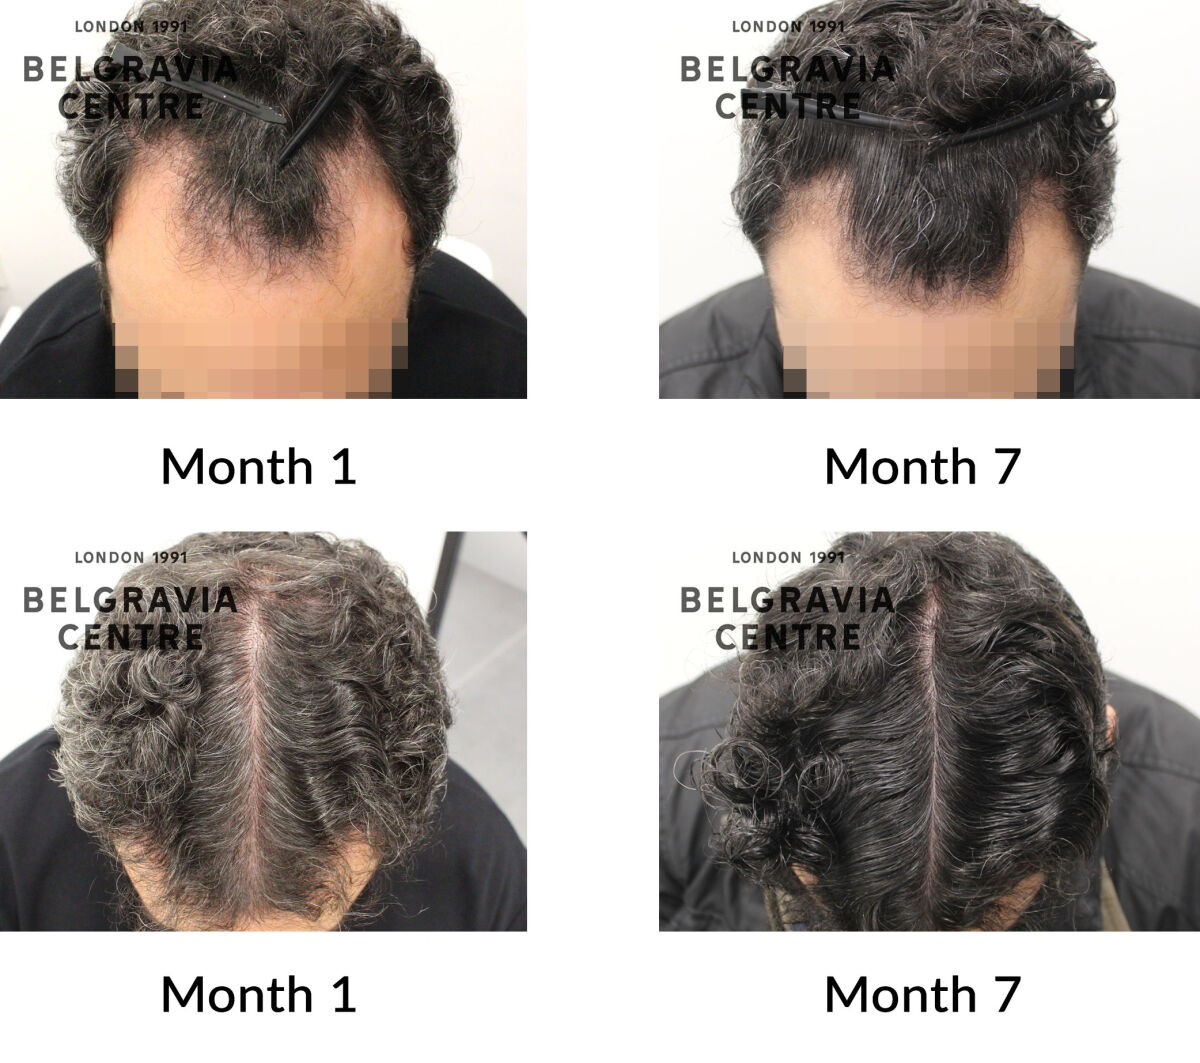 male pattern hair loss the belgravia centre 442900